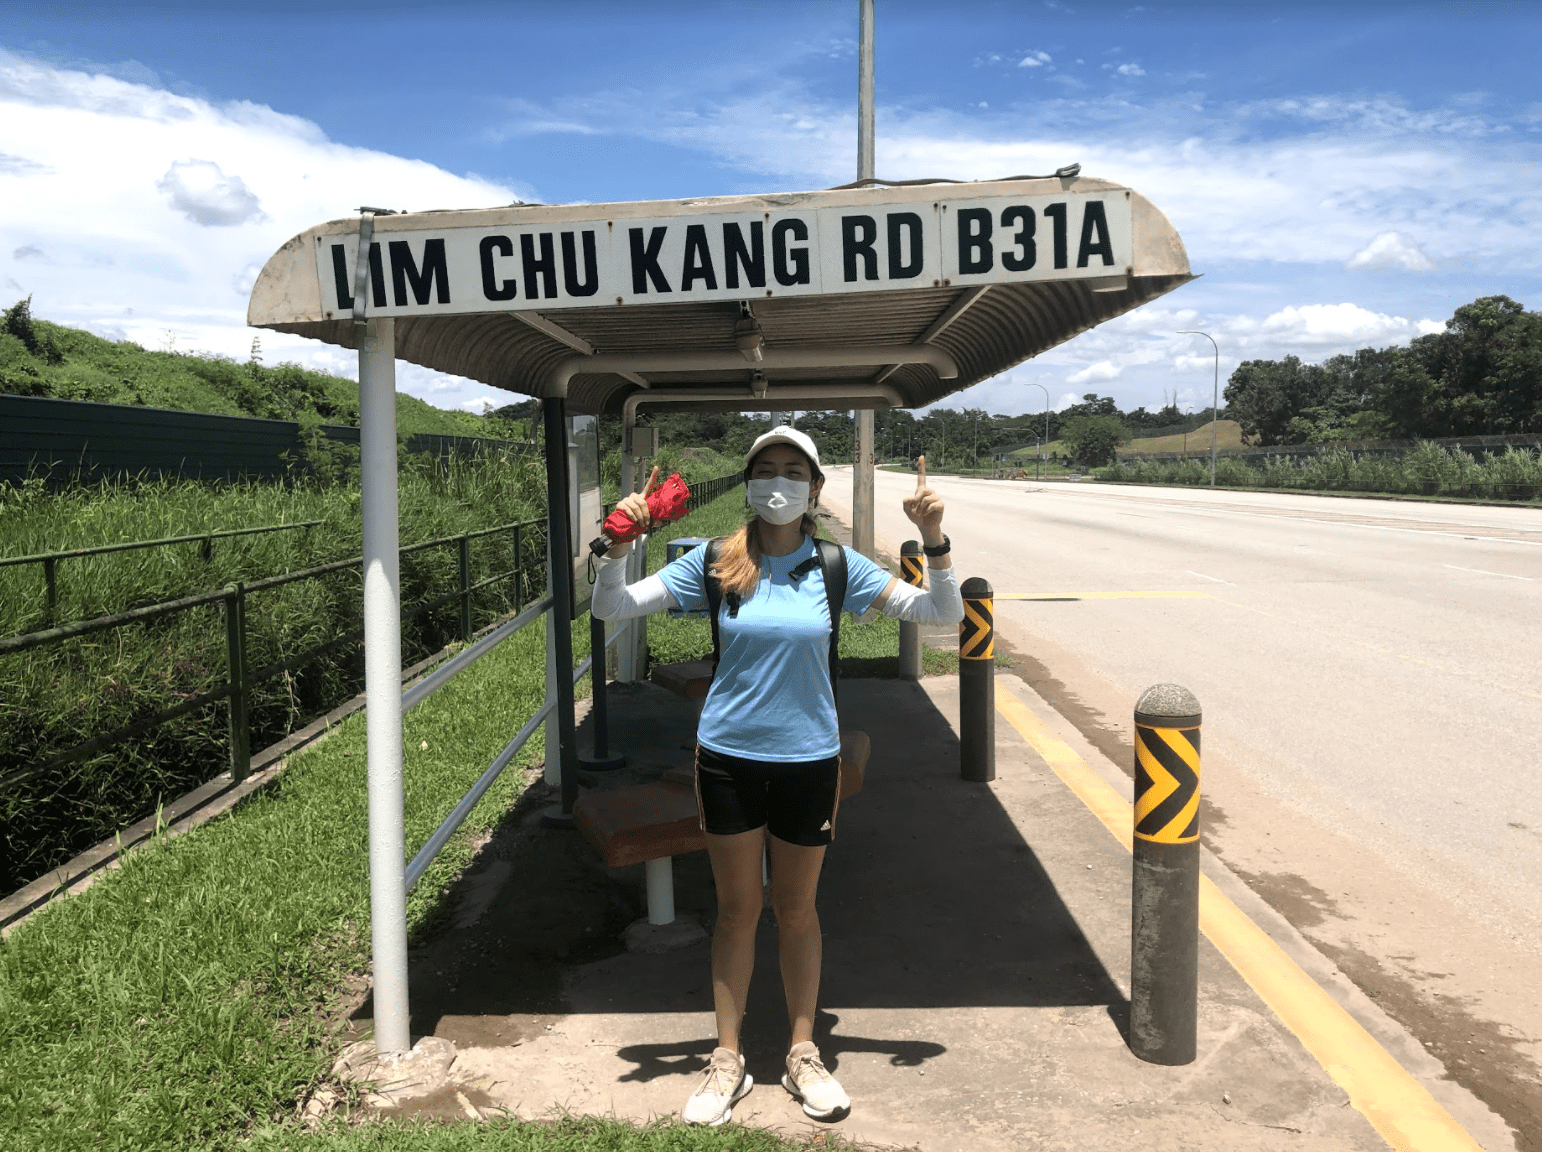 150km singapore walking trail - lim chu kang